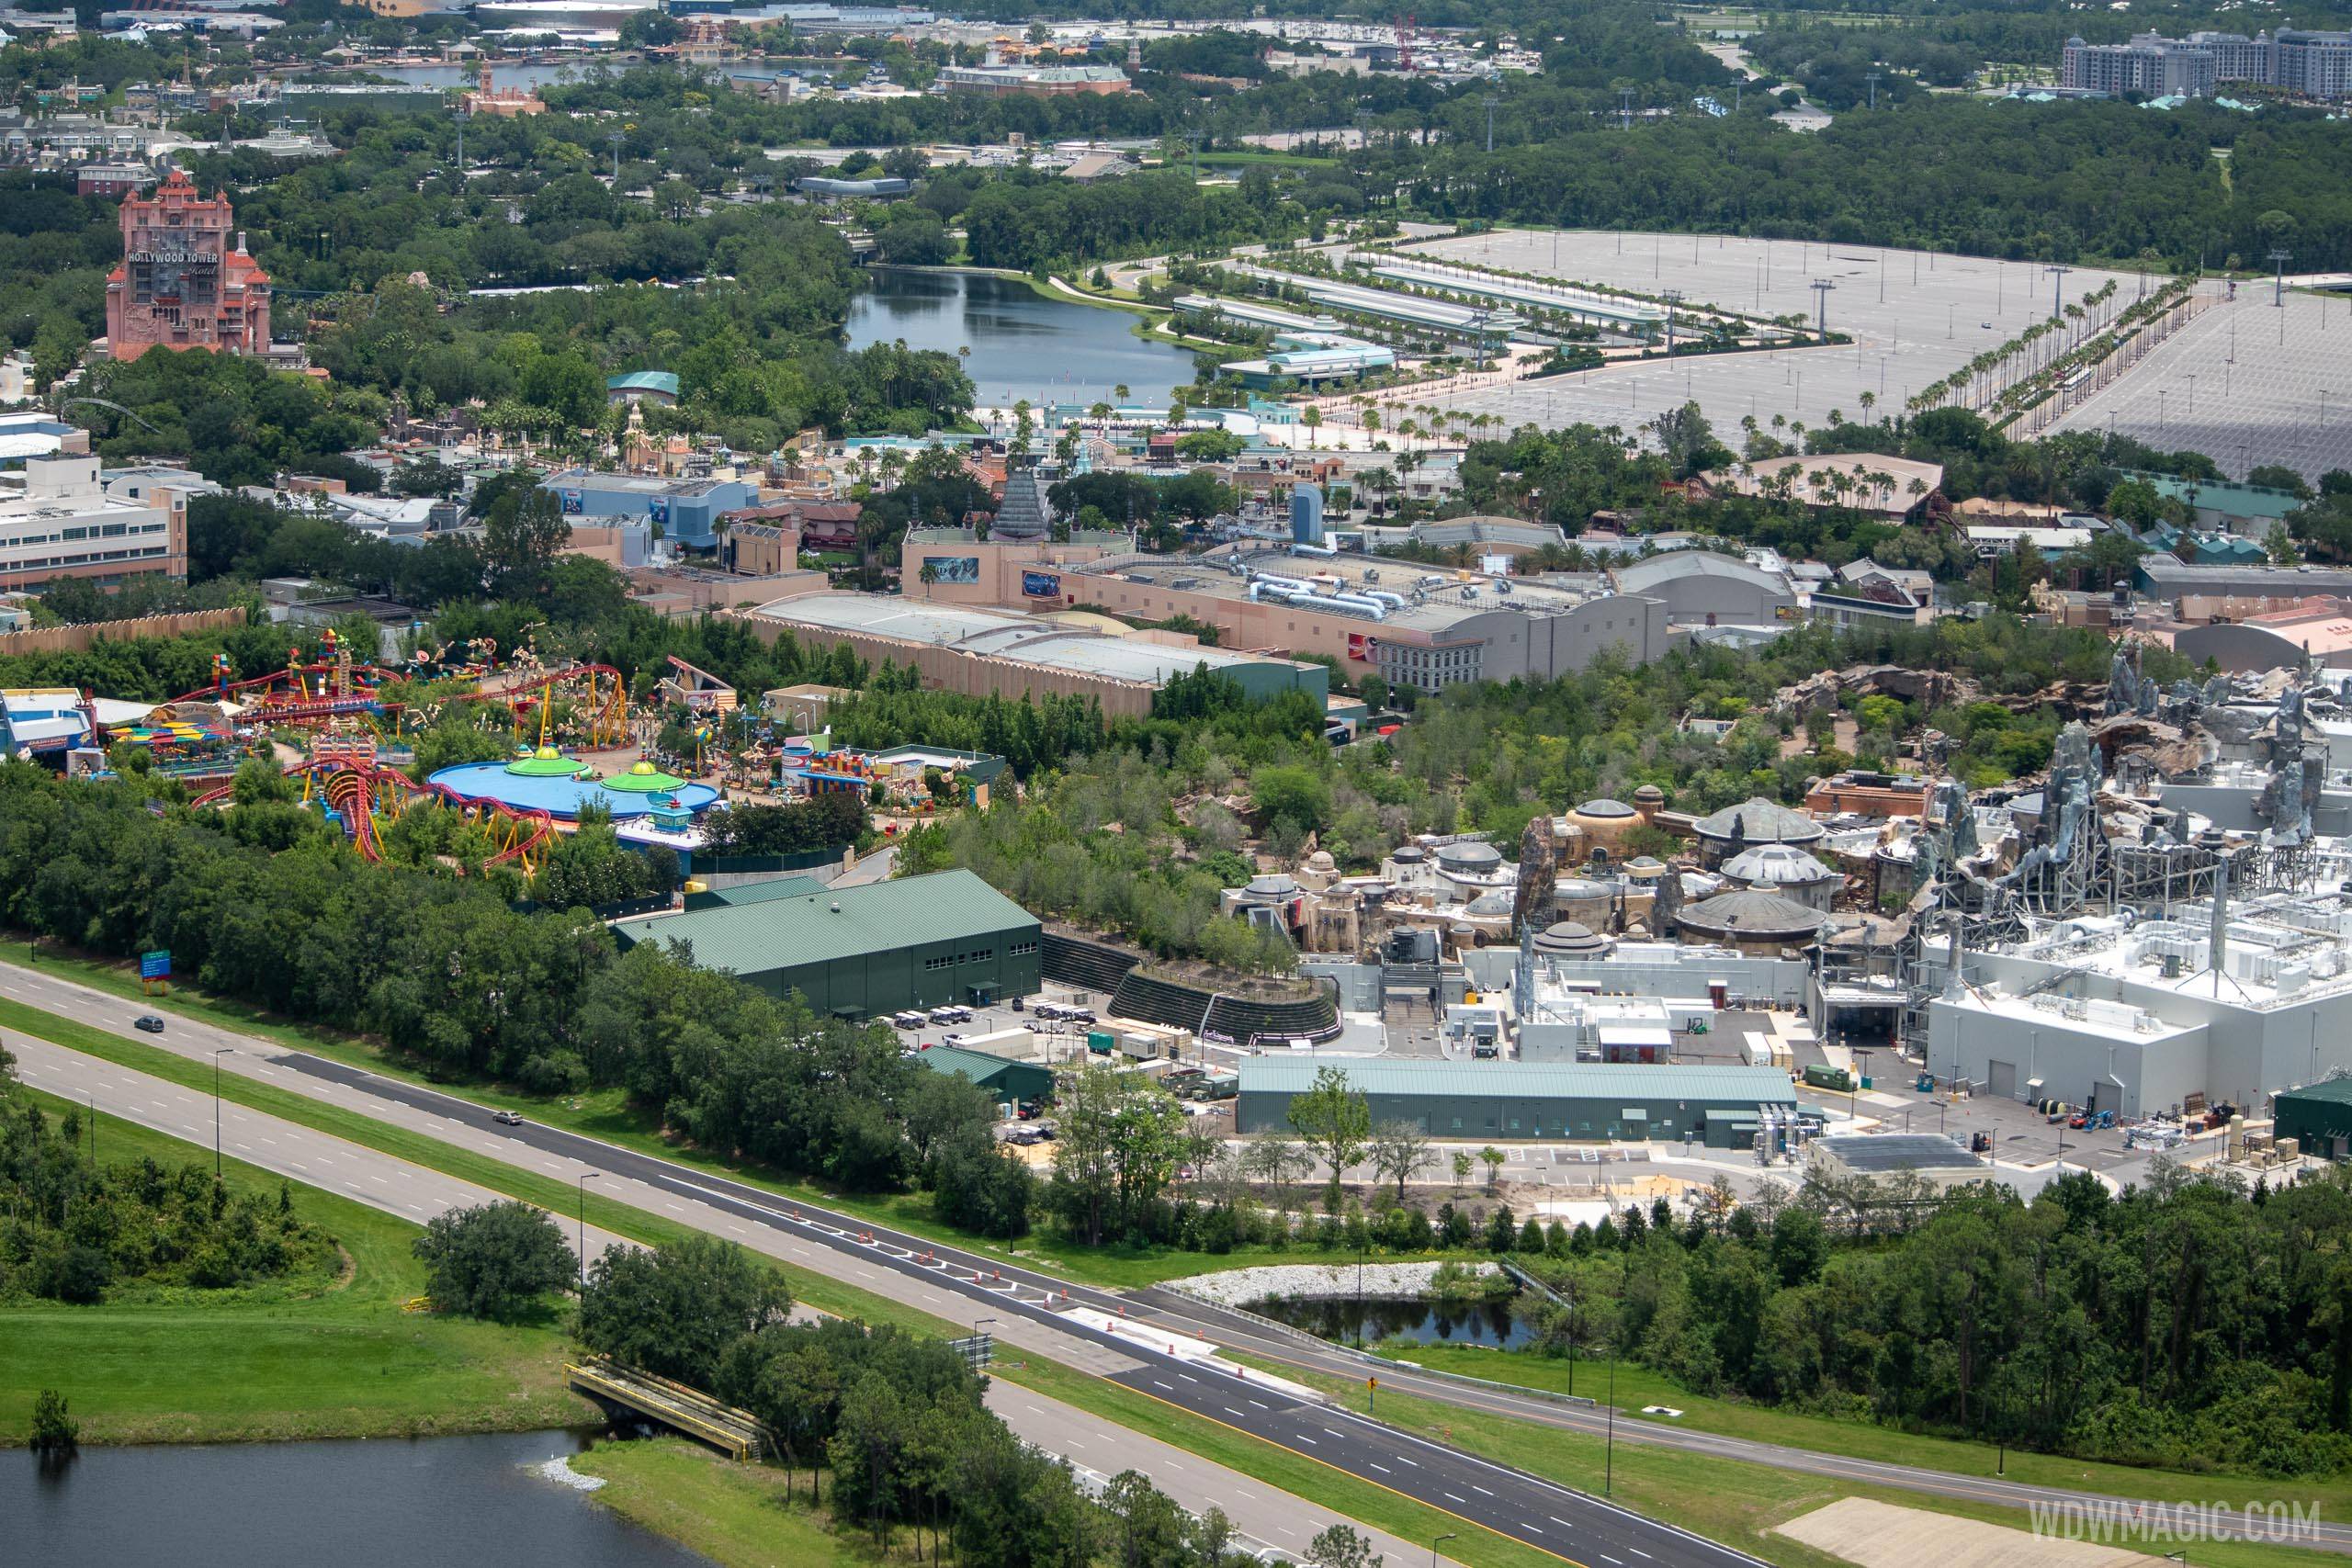 Aerial view of Disney's Hollywood Studios